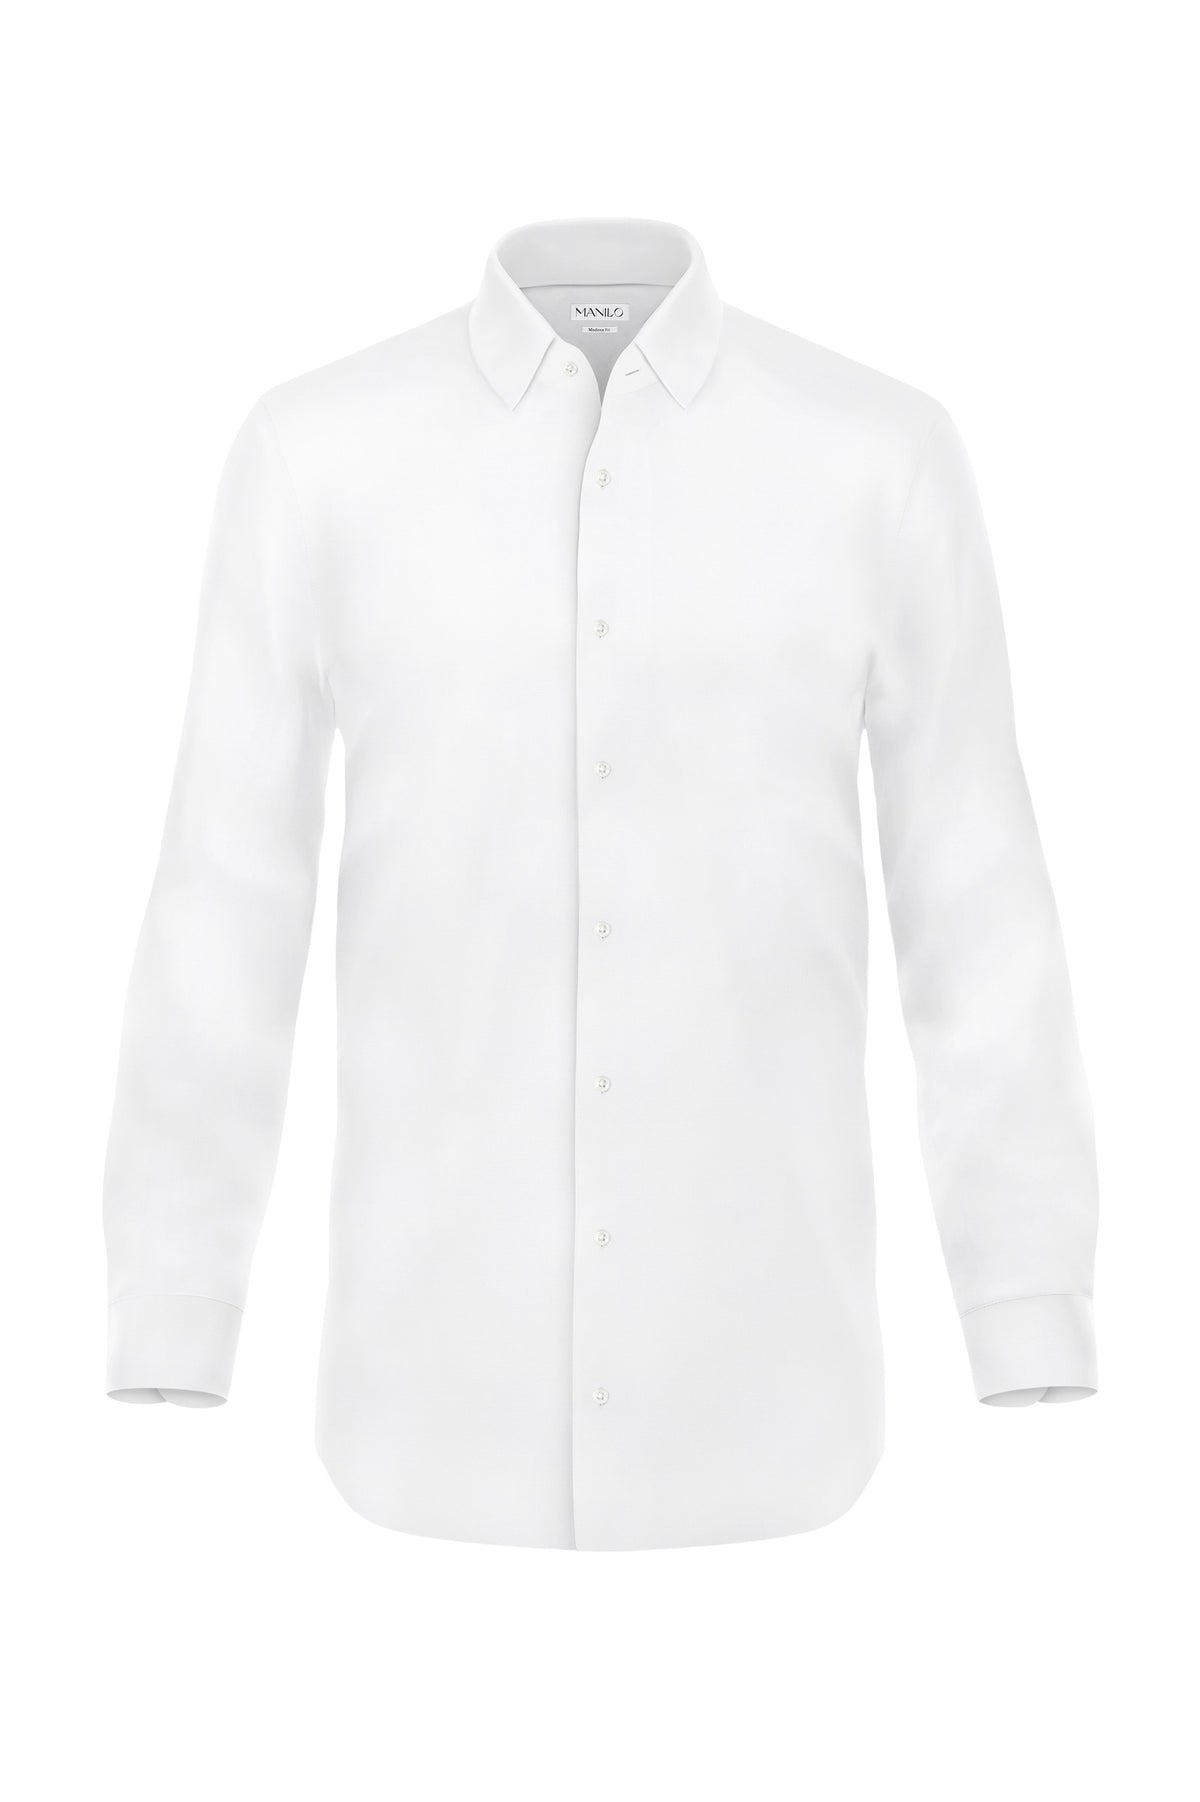 High Quality Twill Shirt White Modern Fit (Straight Cut)